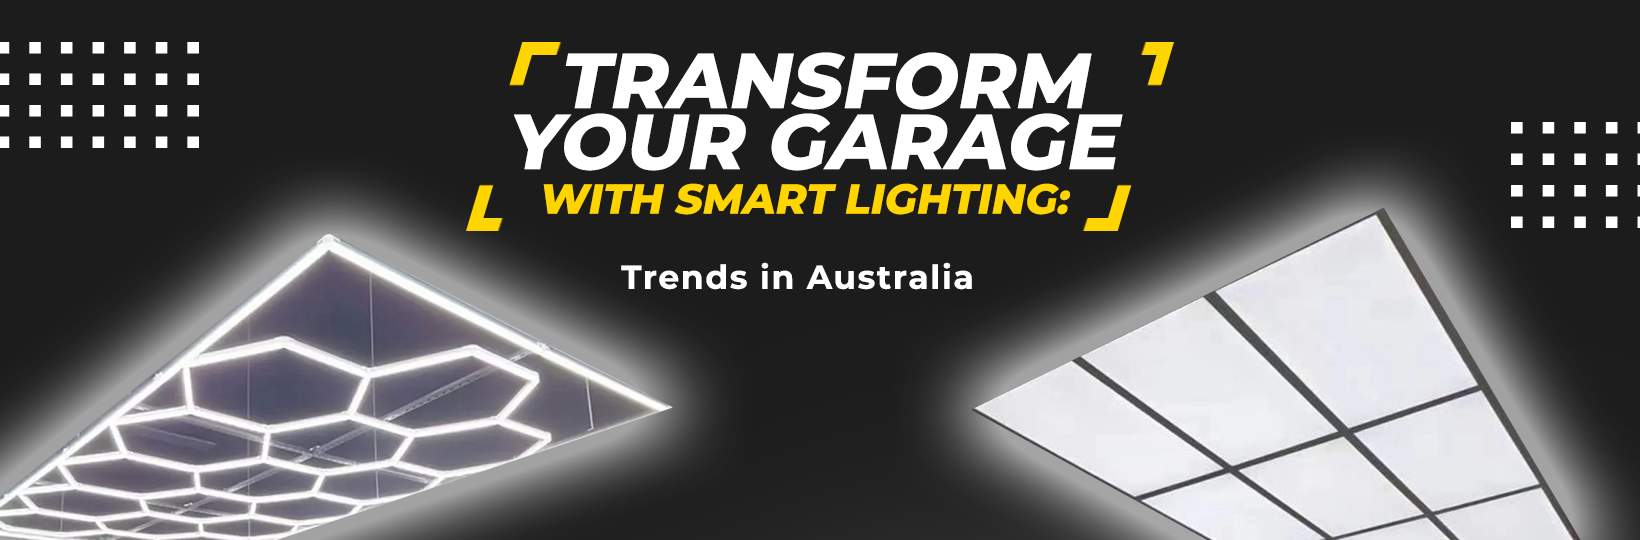 Transform Your Garage with Smart Lighting: Trends in Australia